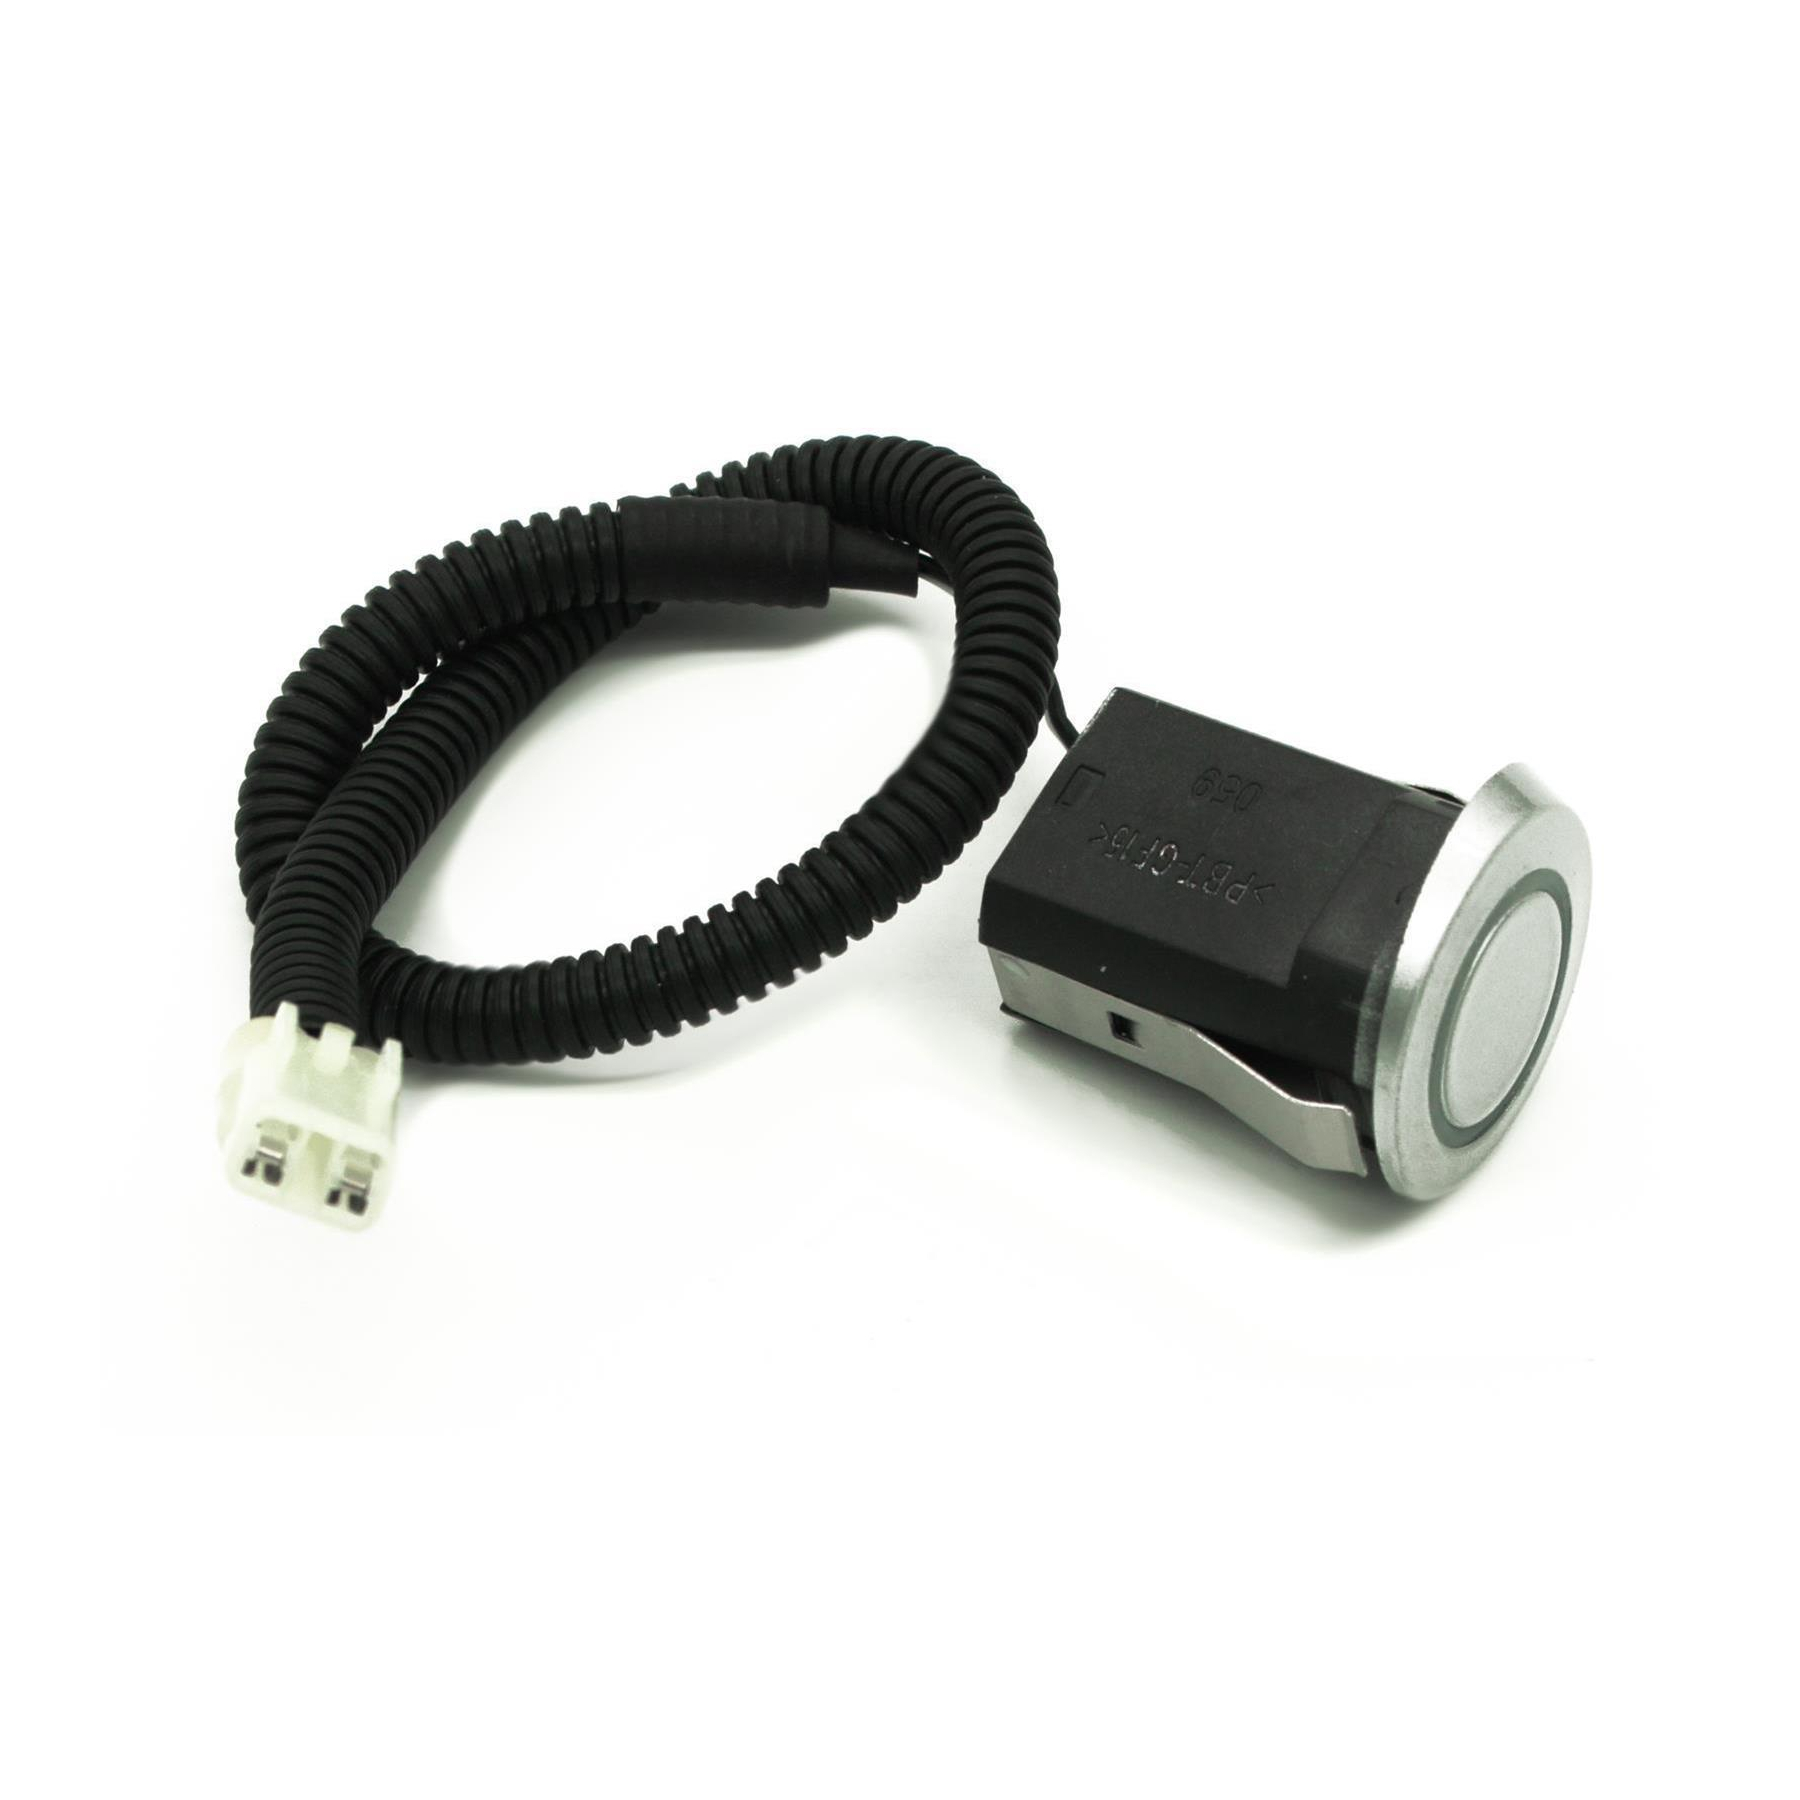 1 x parking sensor for Honda Parktronic PDC Parking Sensor, 20,00 €